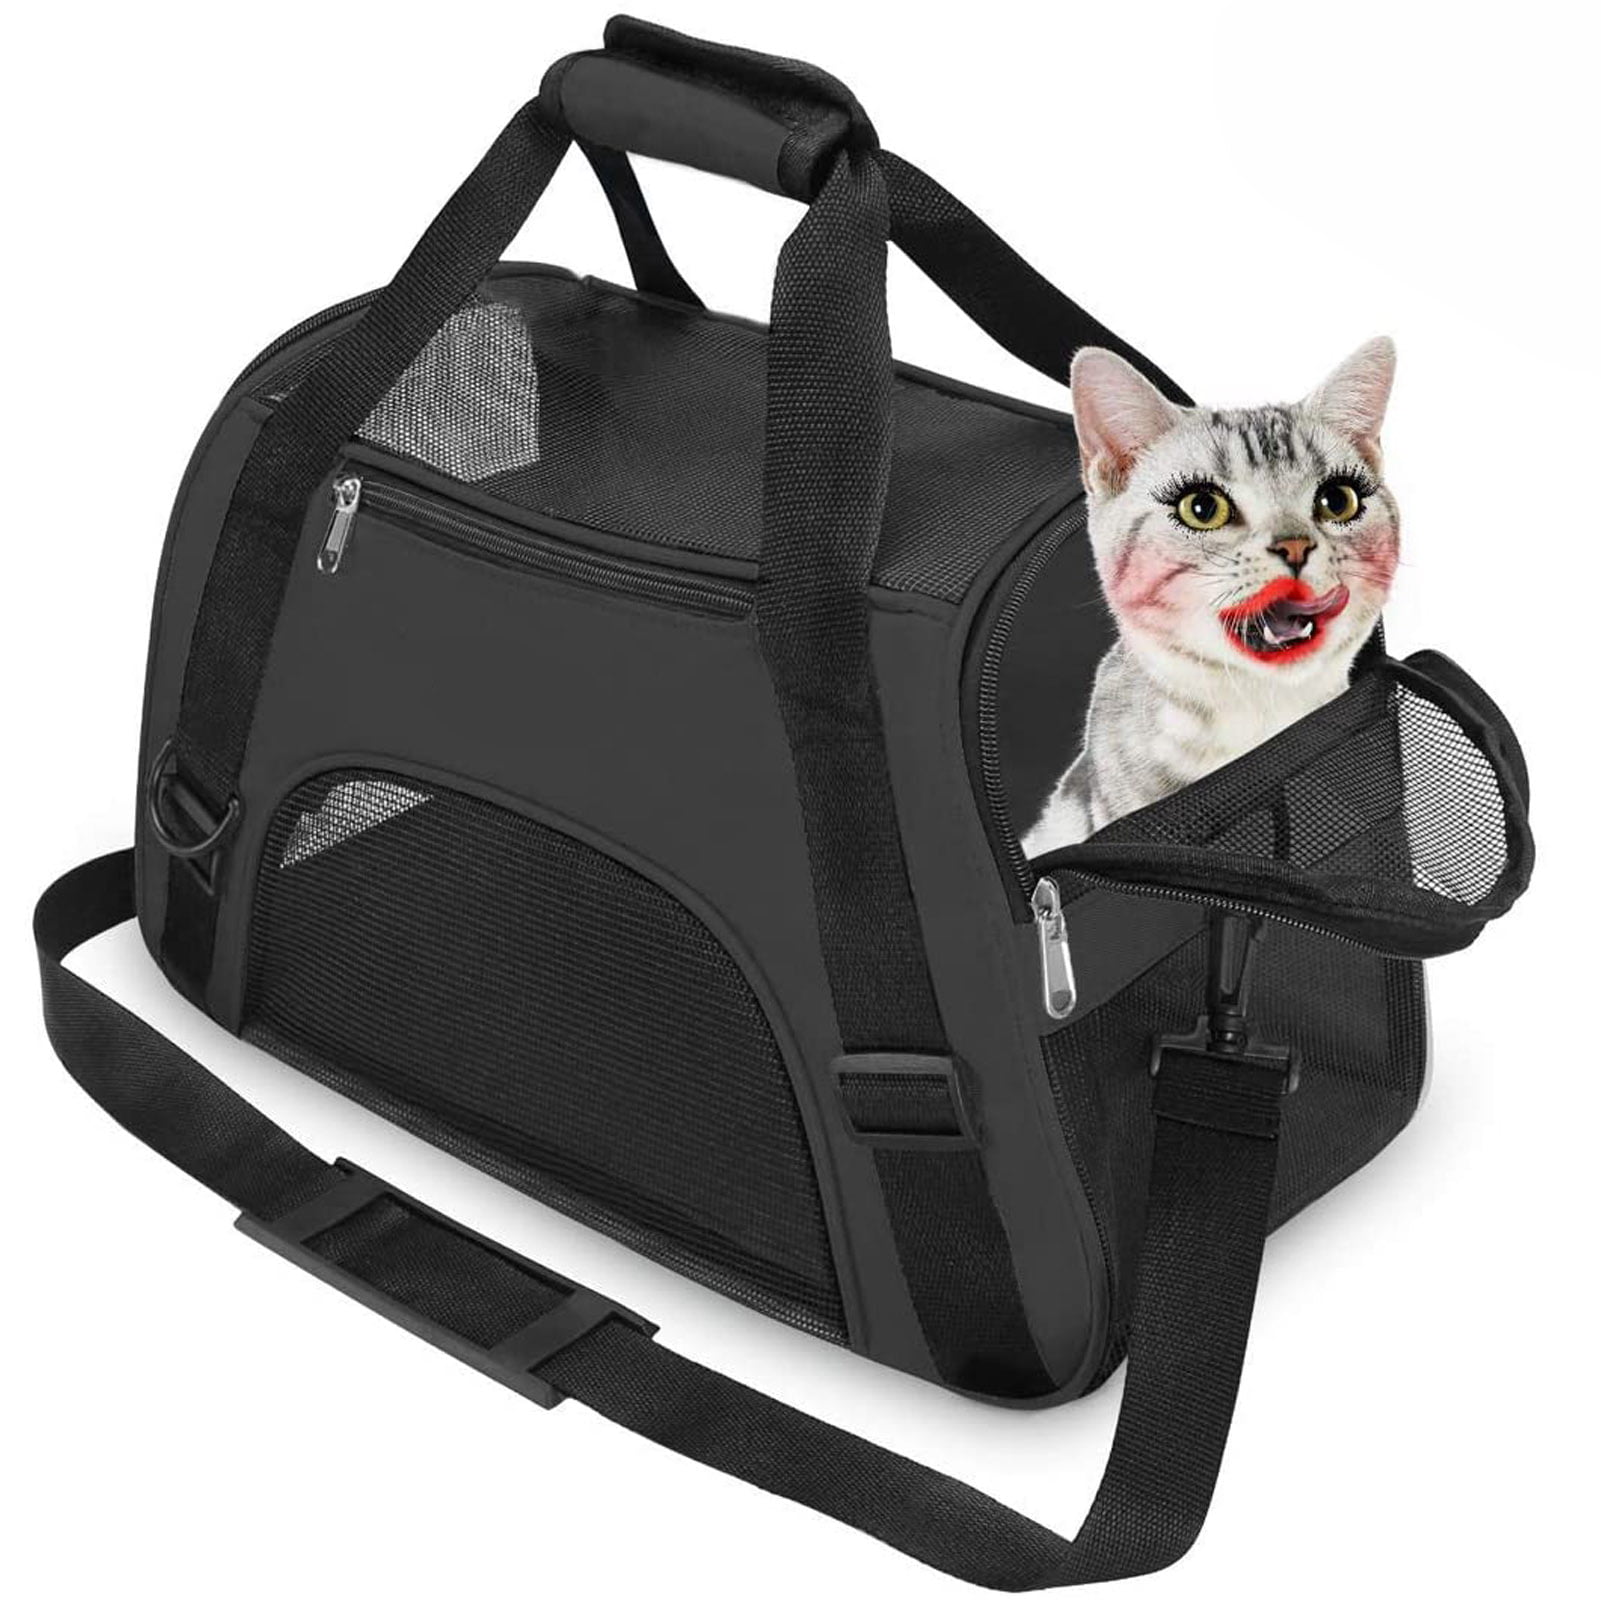 Cute RV Shaped Small Dog or Cat Carrier Water Resistant Travel Bag with Adjustable Shoulder Strap Etna Happy Camper Pet Carrier